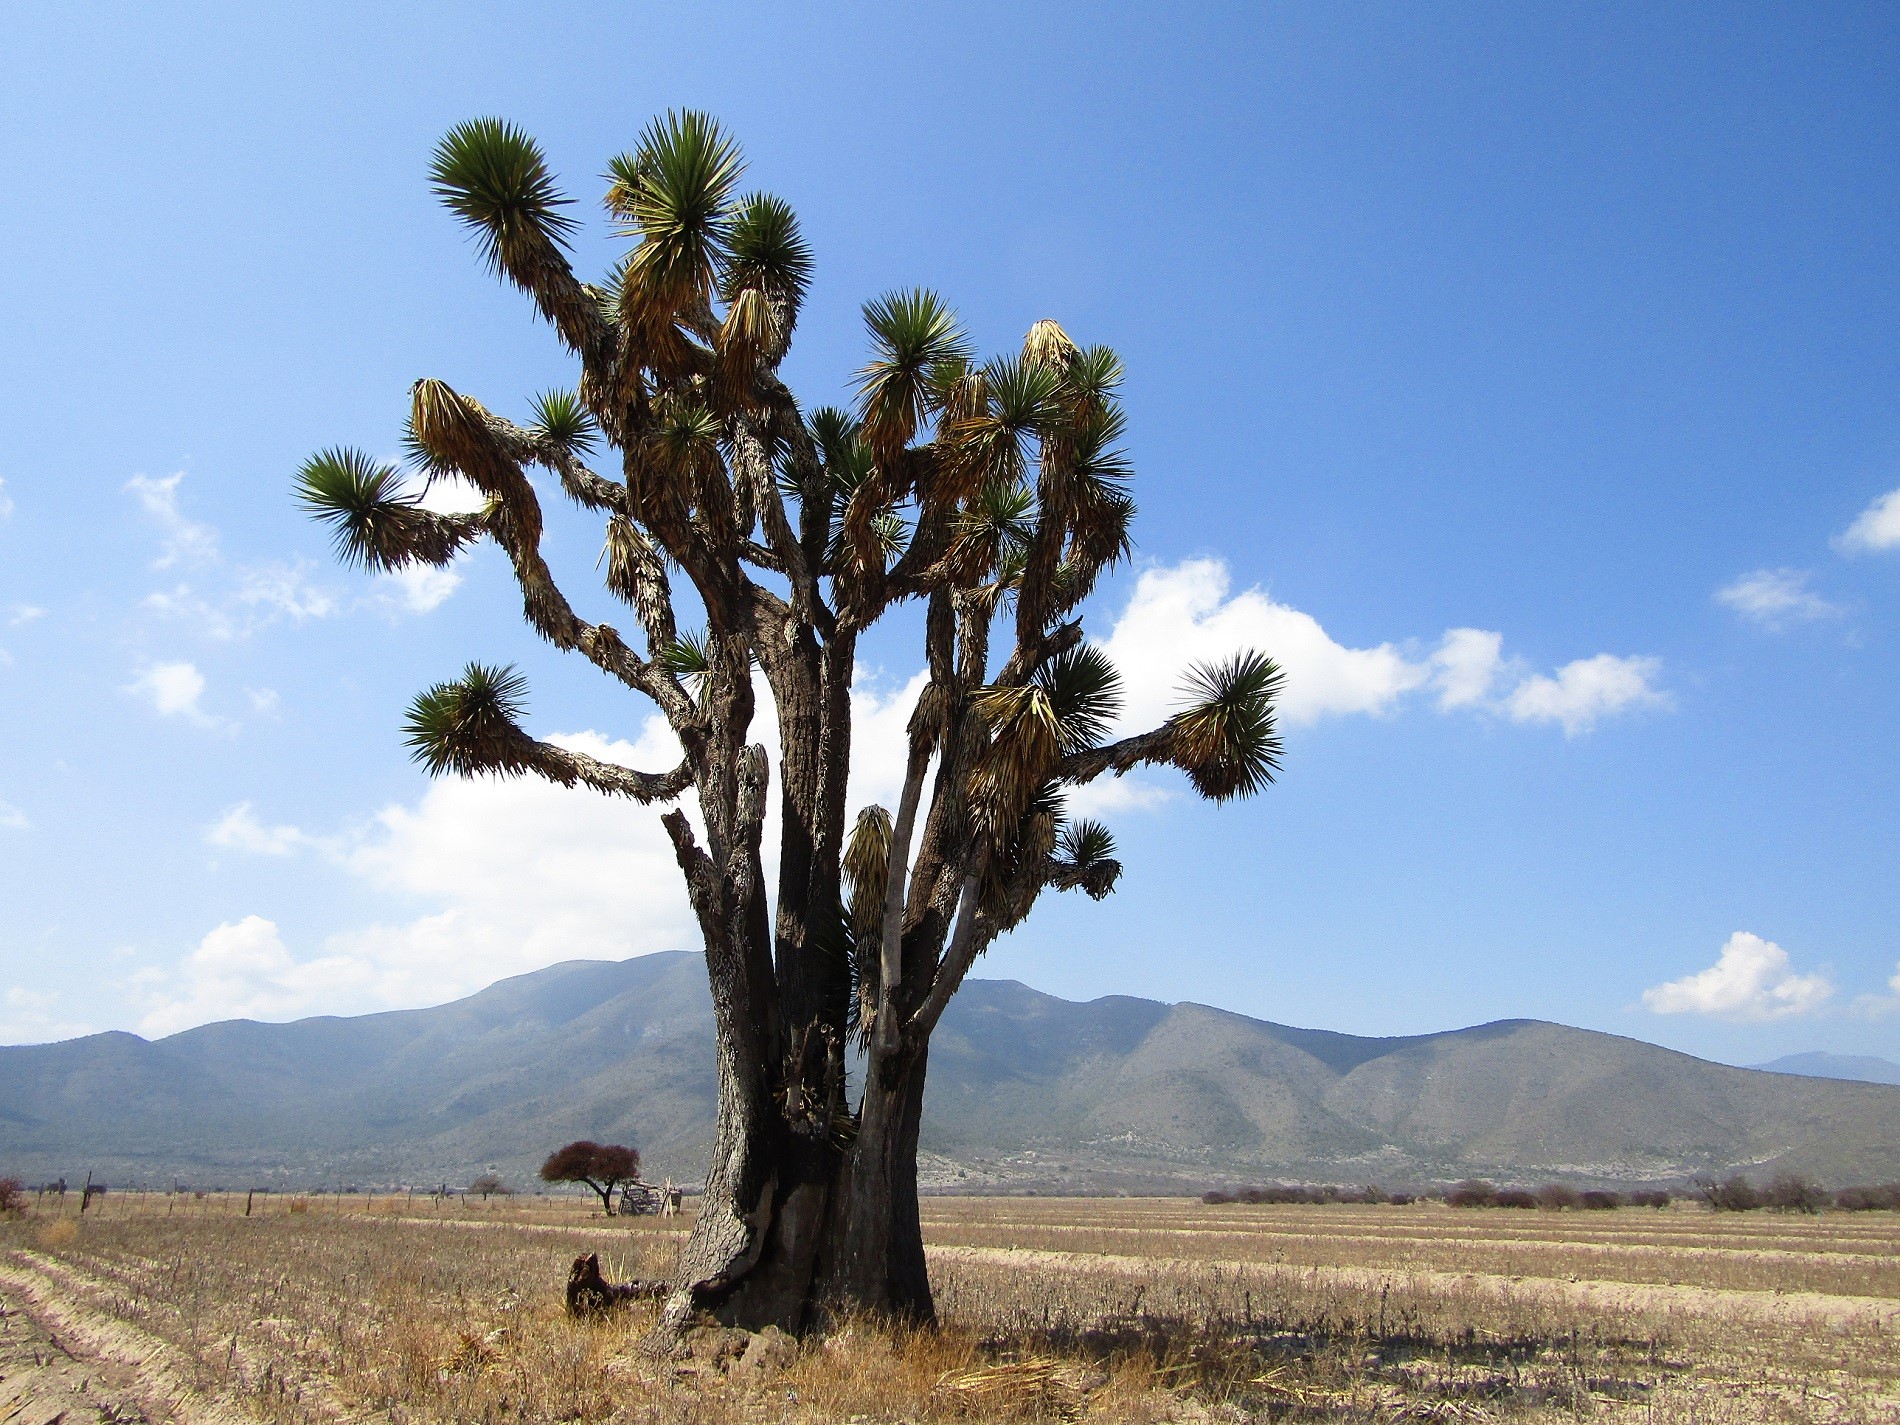 
Yuca (Yucca filifera)
